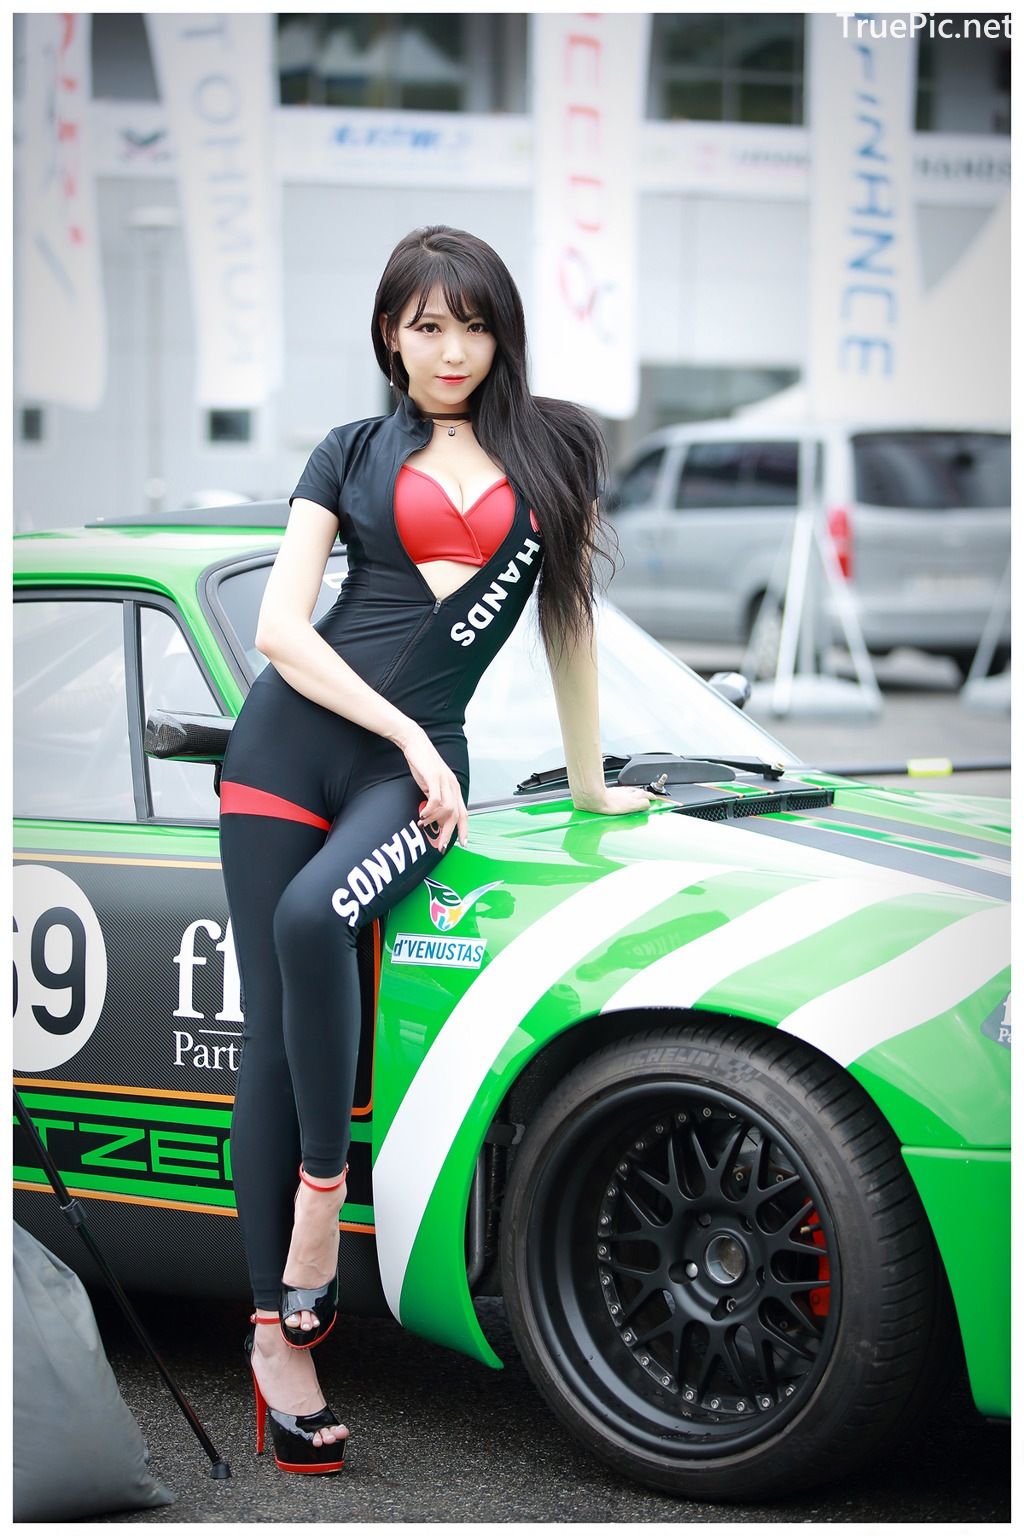 Image-Korean-Racing-Model-Lee-Eun-Hye-At-Incheon-Korea-Tuning-Festival-TruePic.net- Picture-226